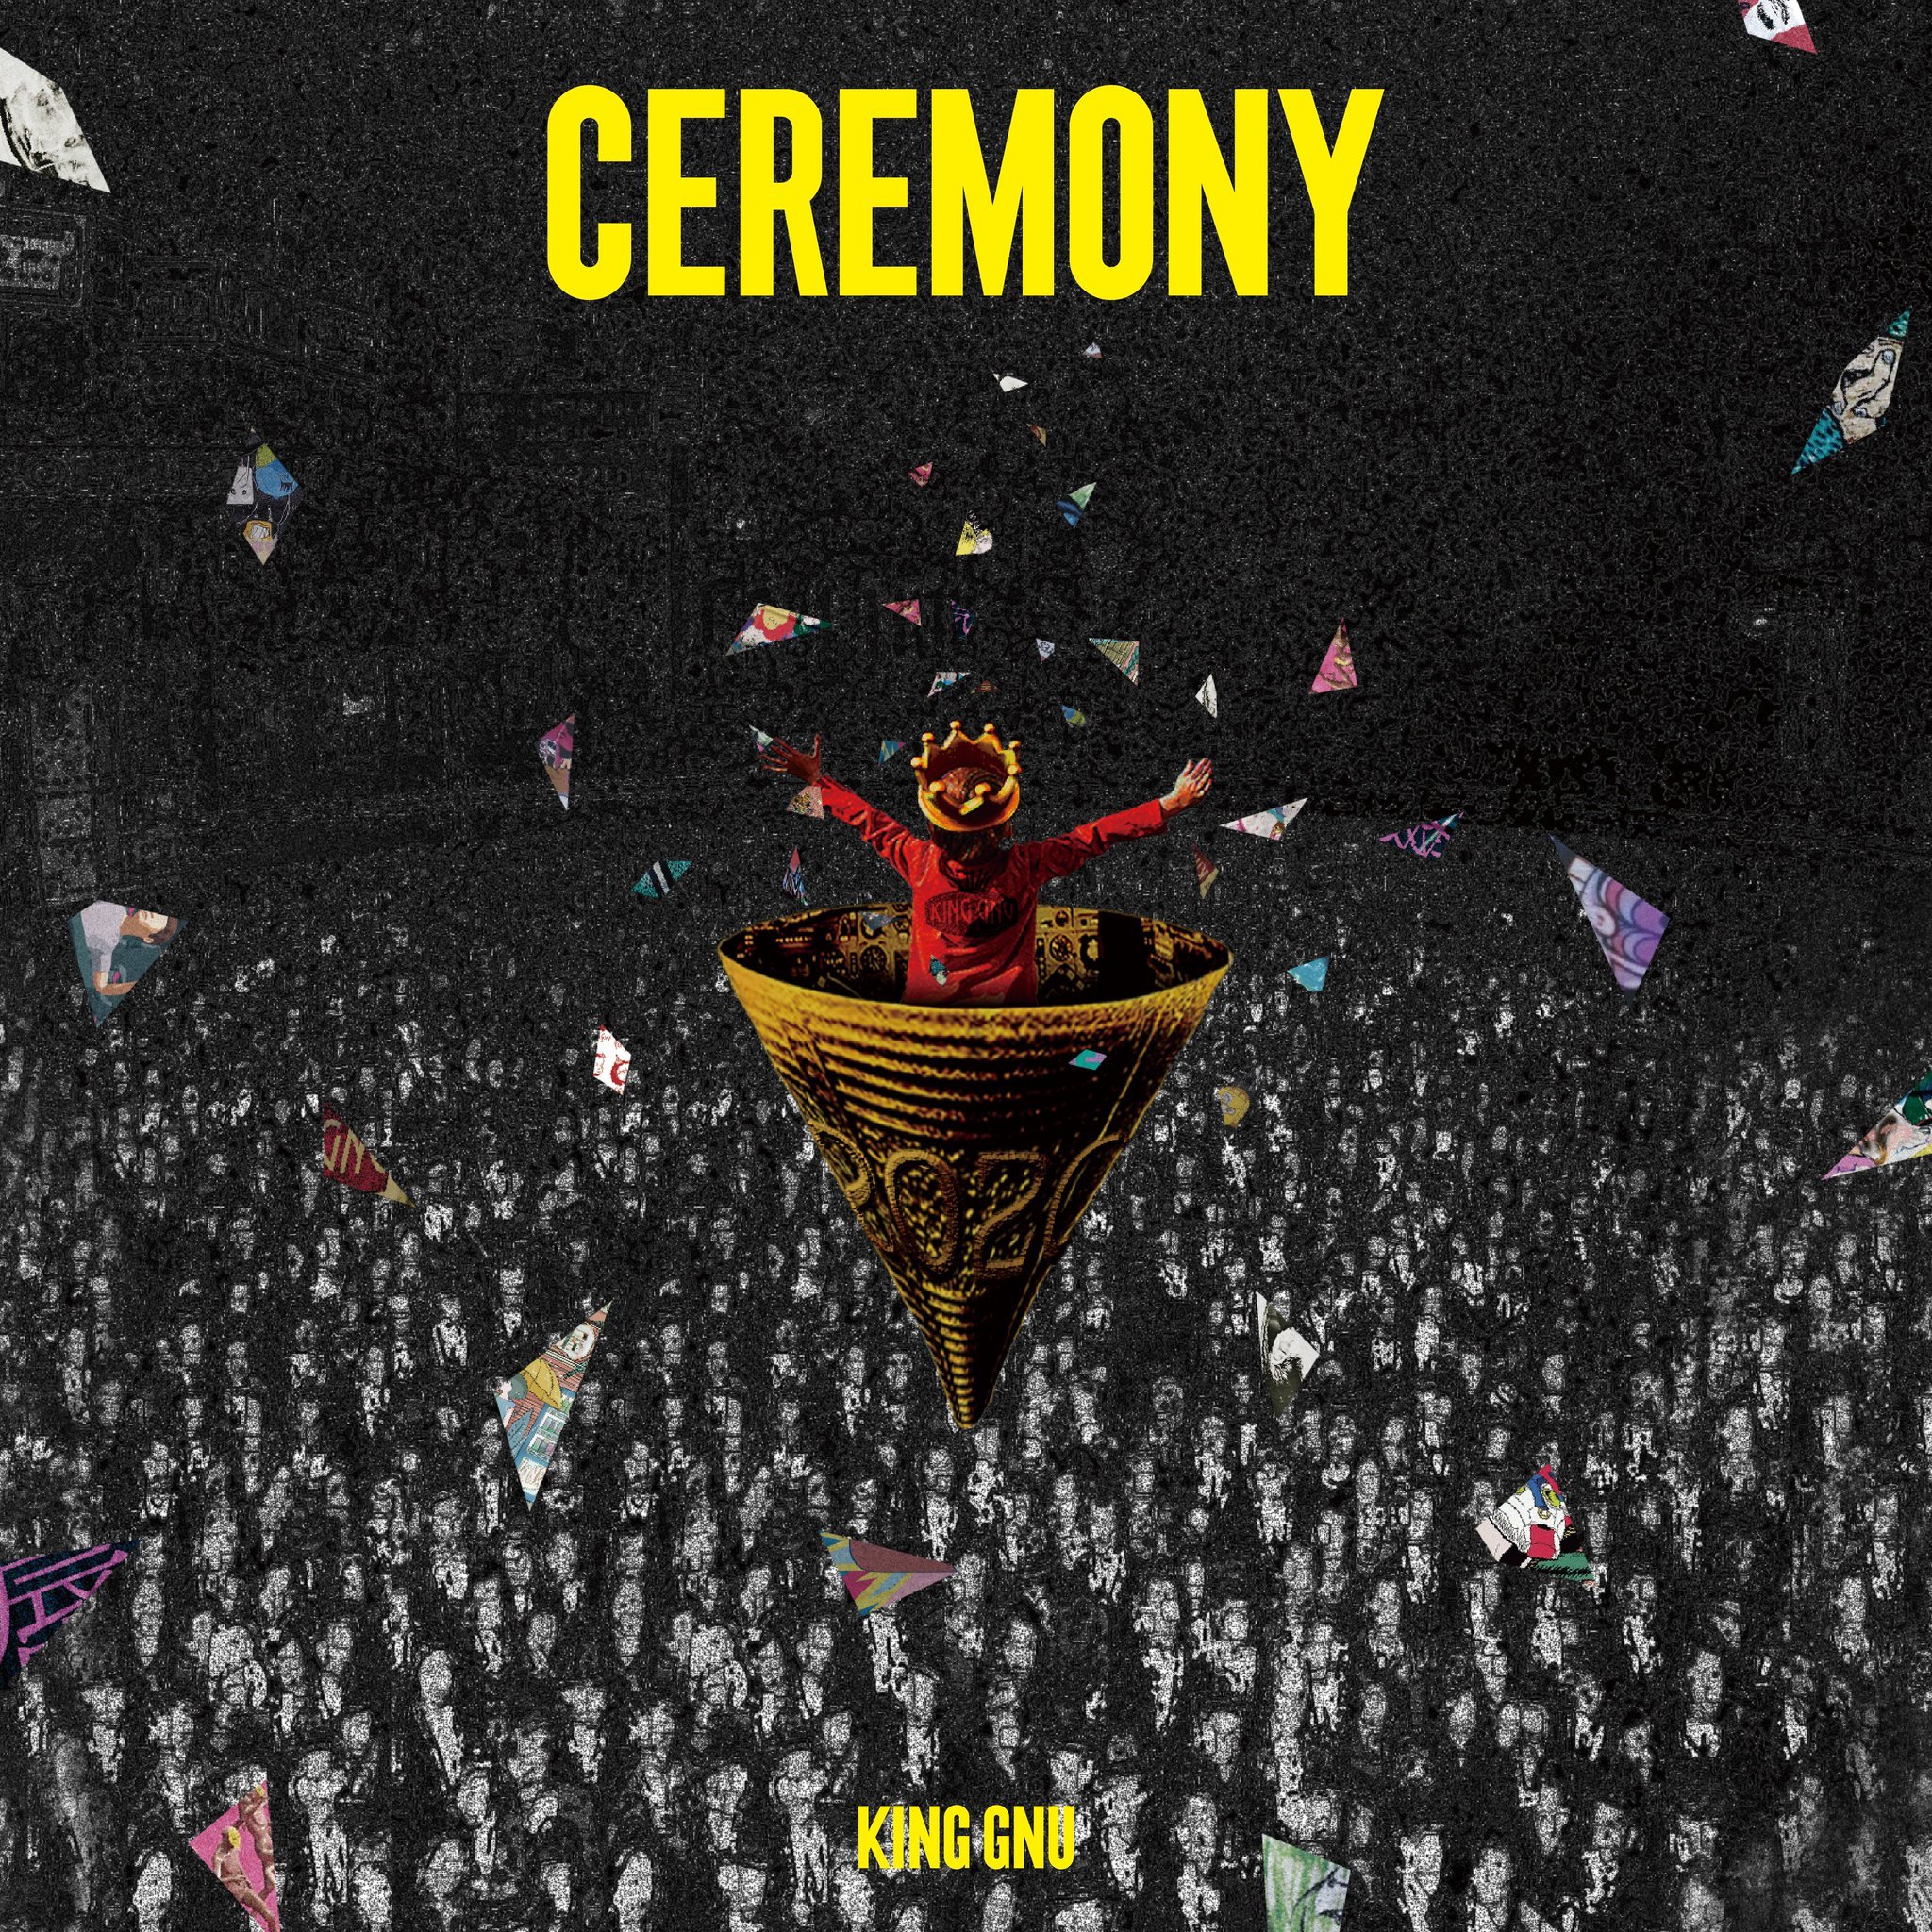 King Gnu (キングヌー) 3rdアルバム『CEREMONY』(2020年1月15日発売) 高画質CDジャケット画像 (ジャケ写)